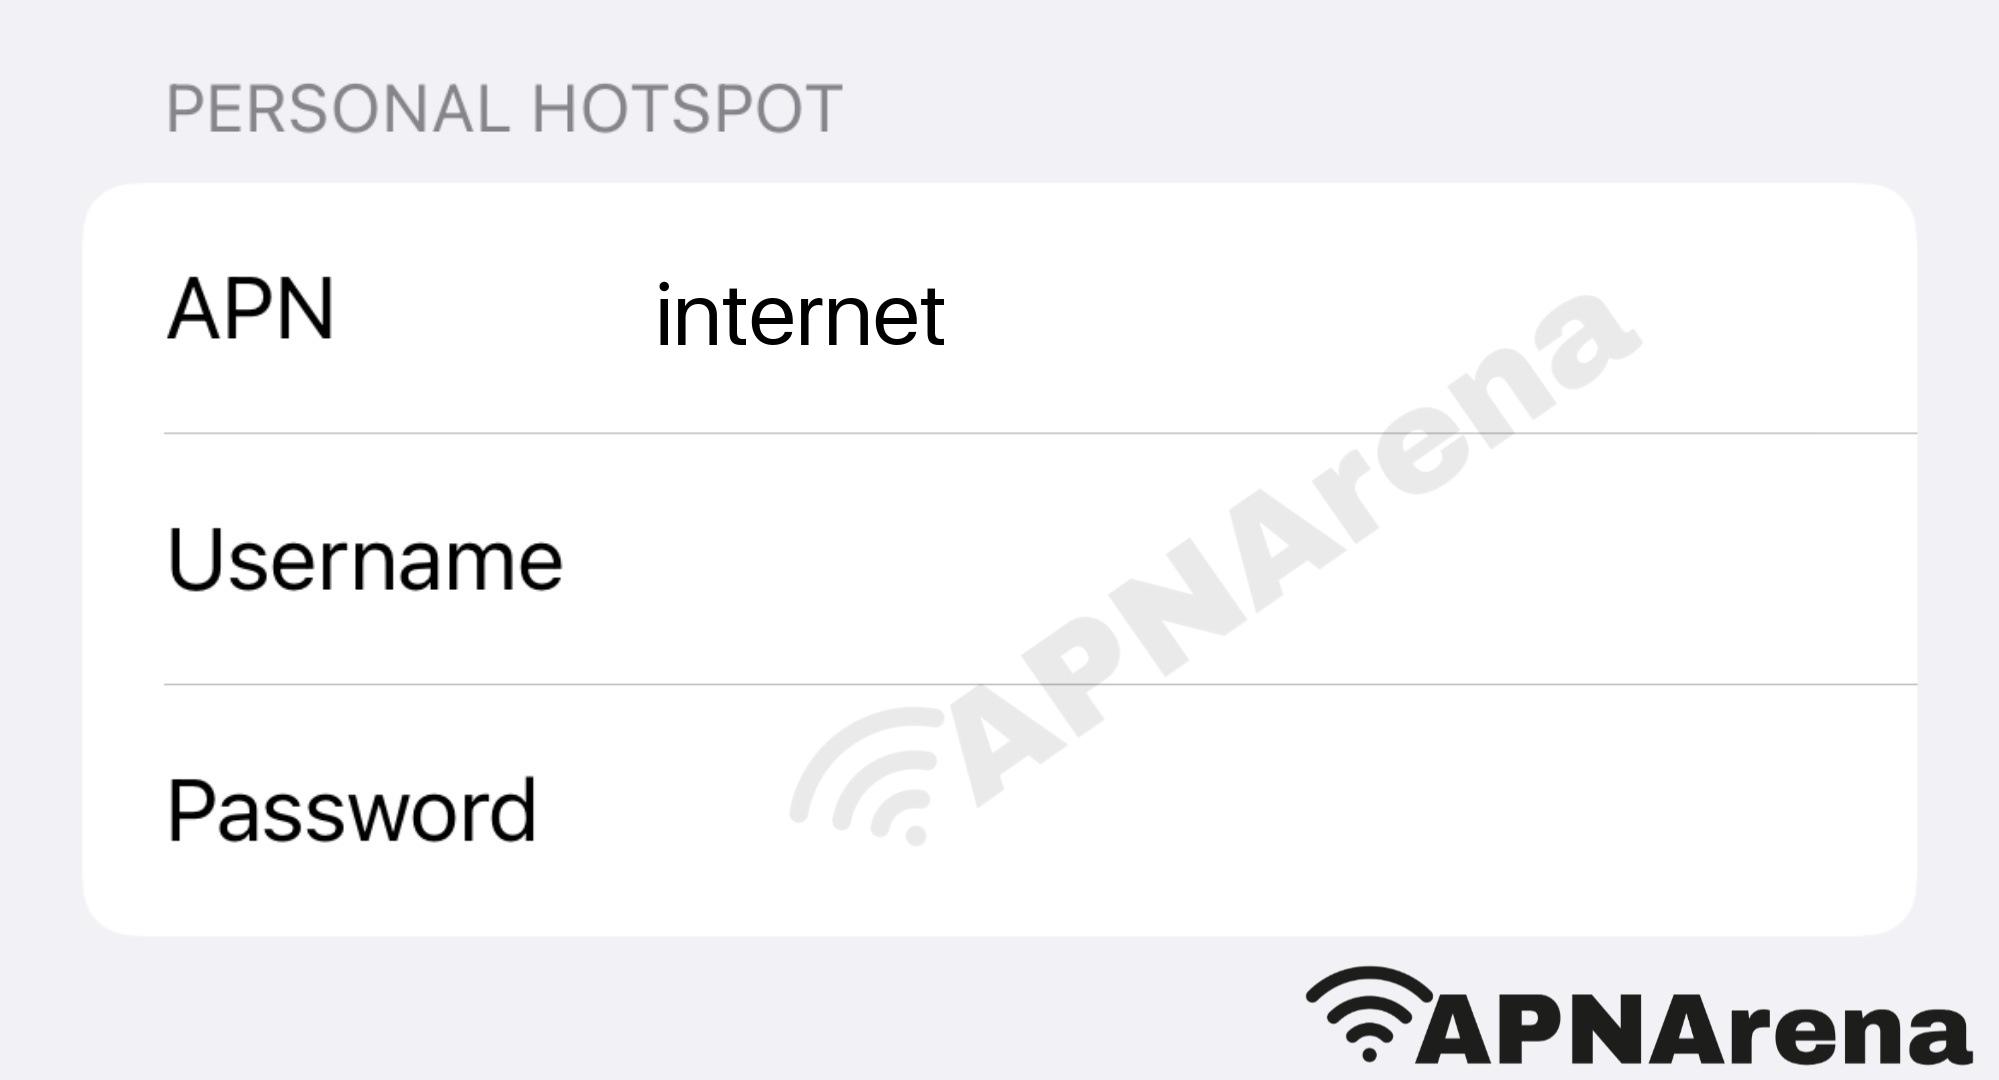 Manx Telecom Personal Hotspot Settings for iPhone